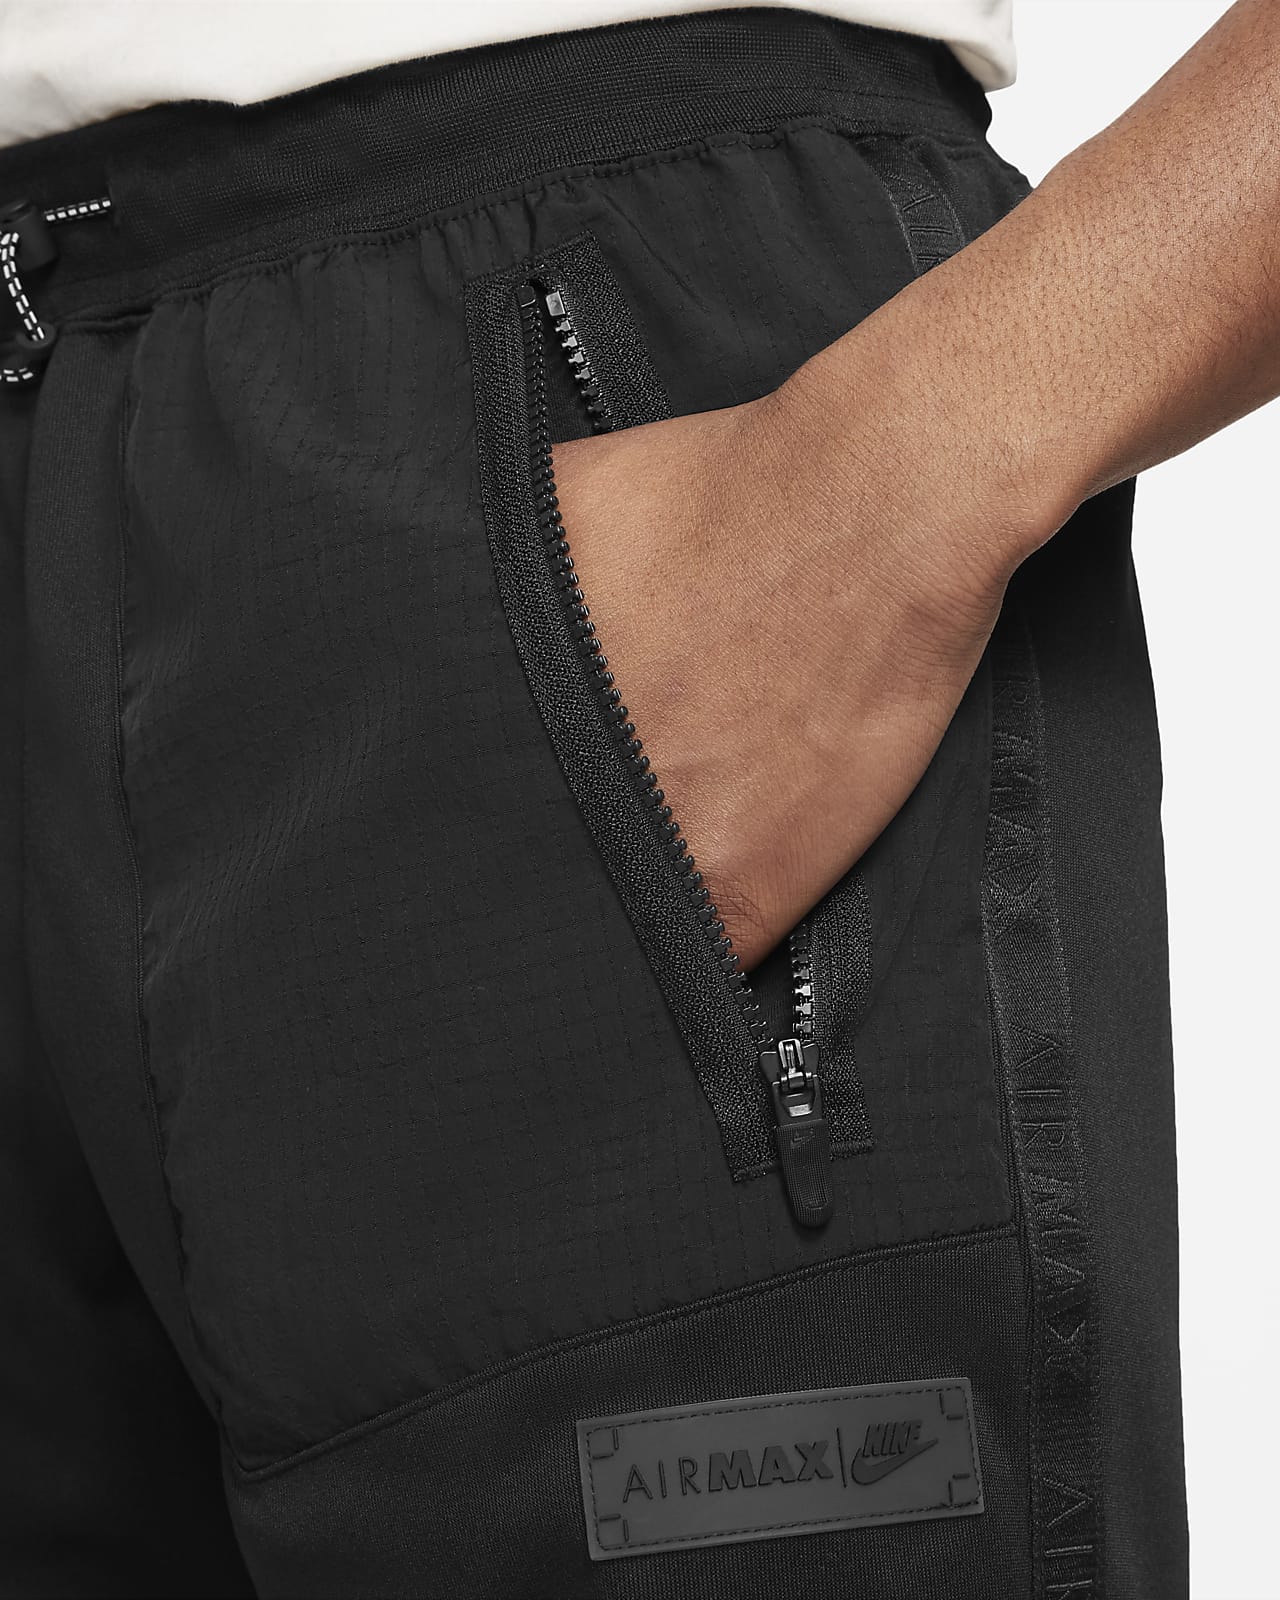 mens black nike shorts with zip pockets